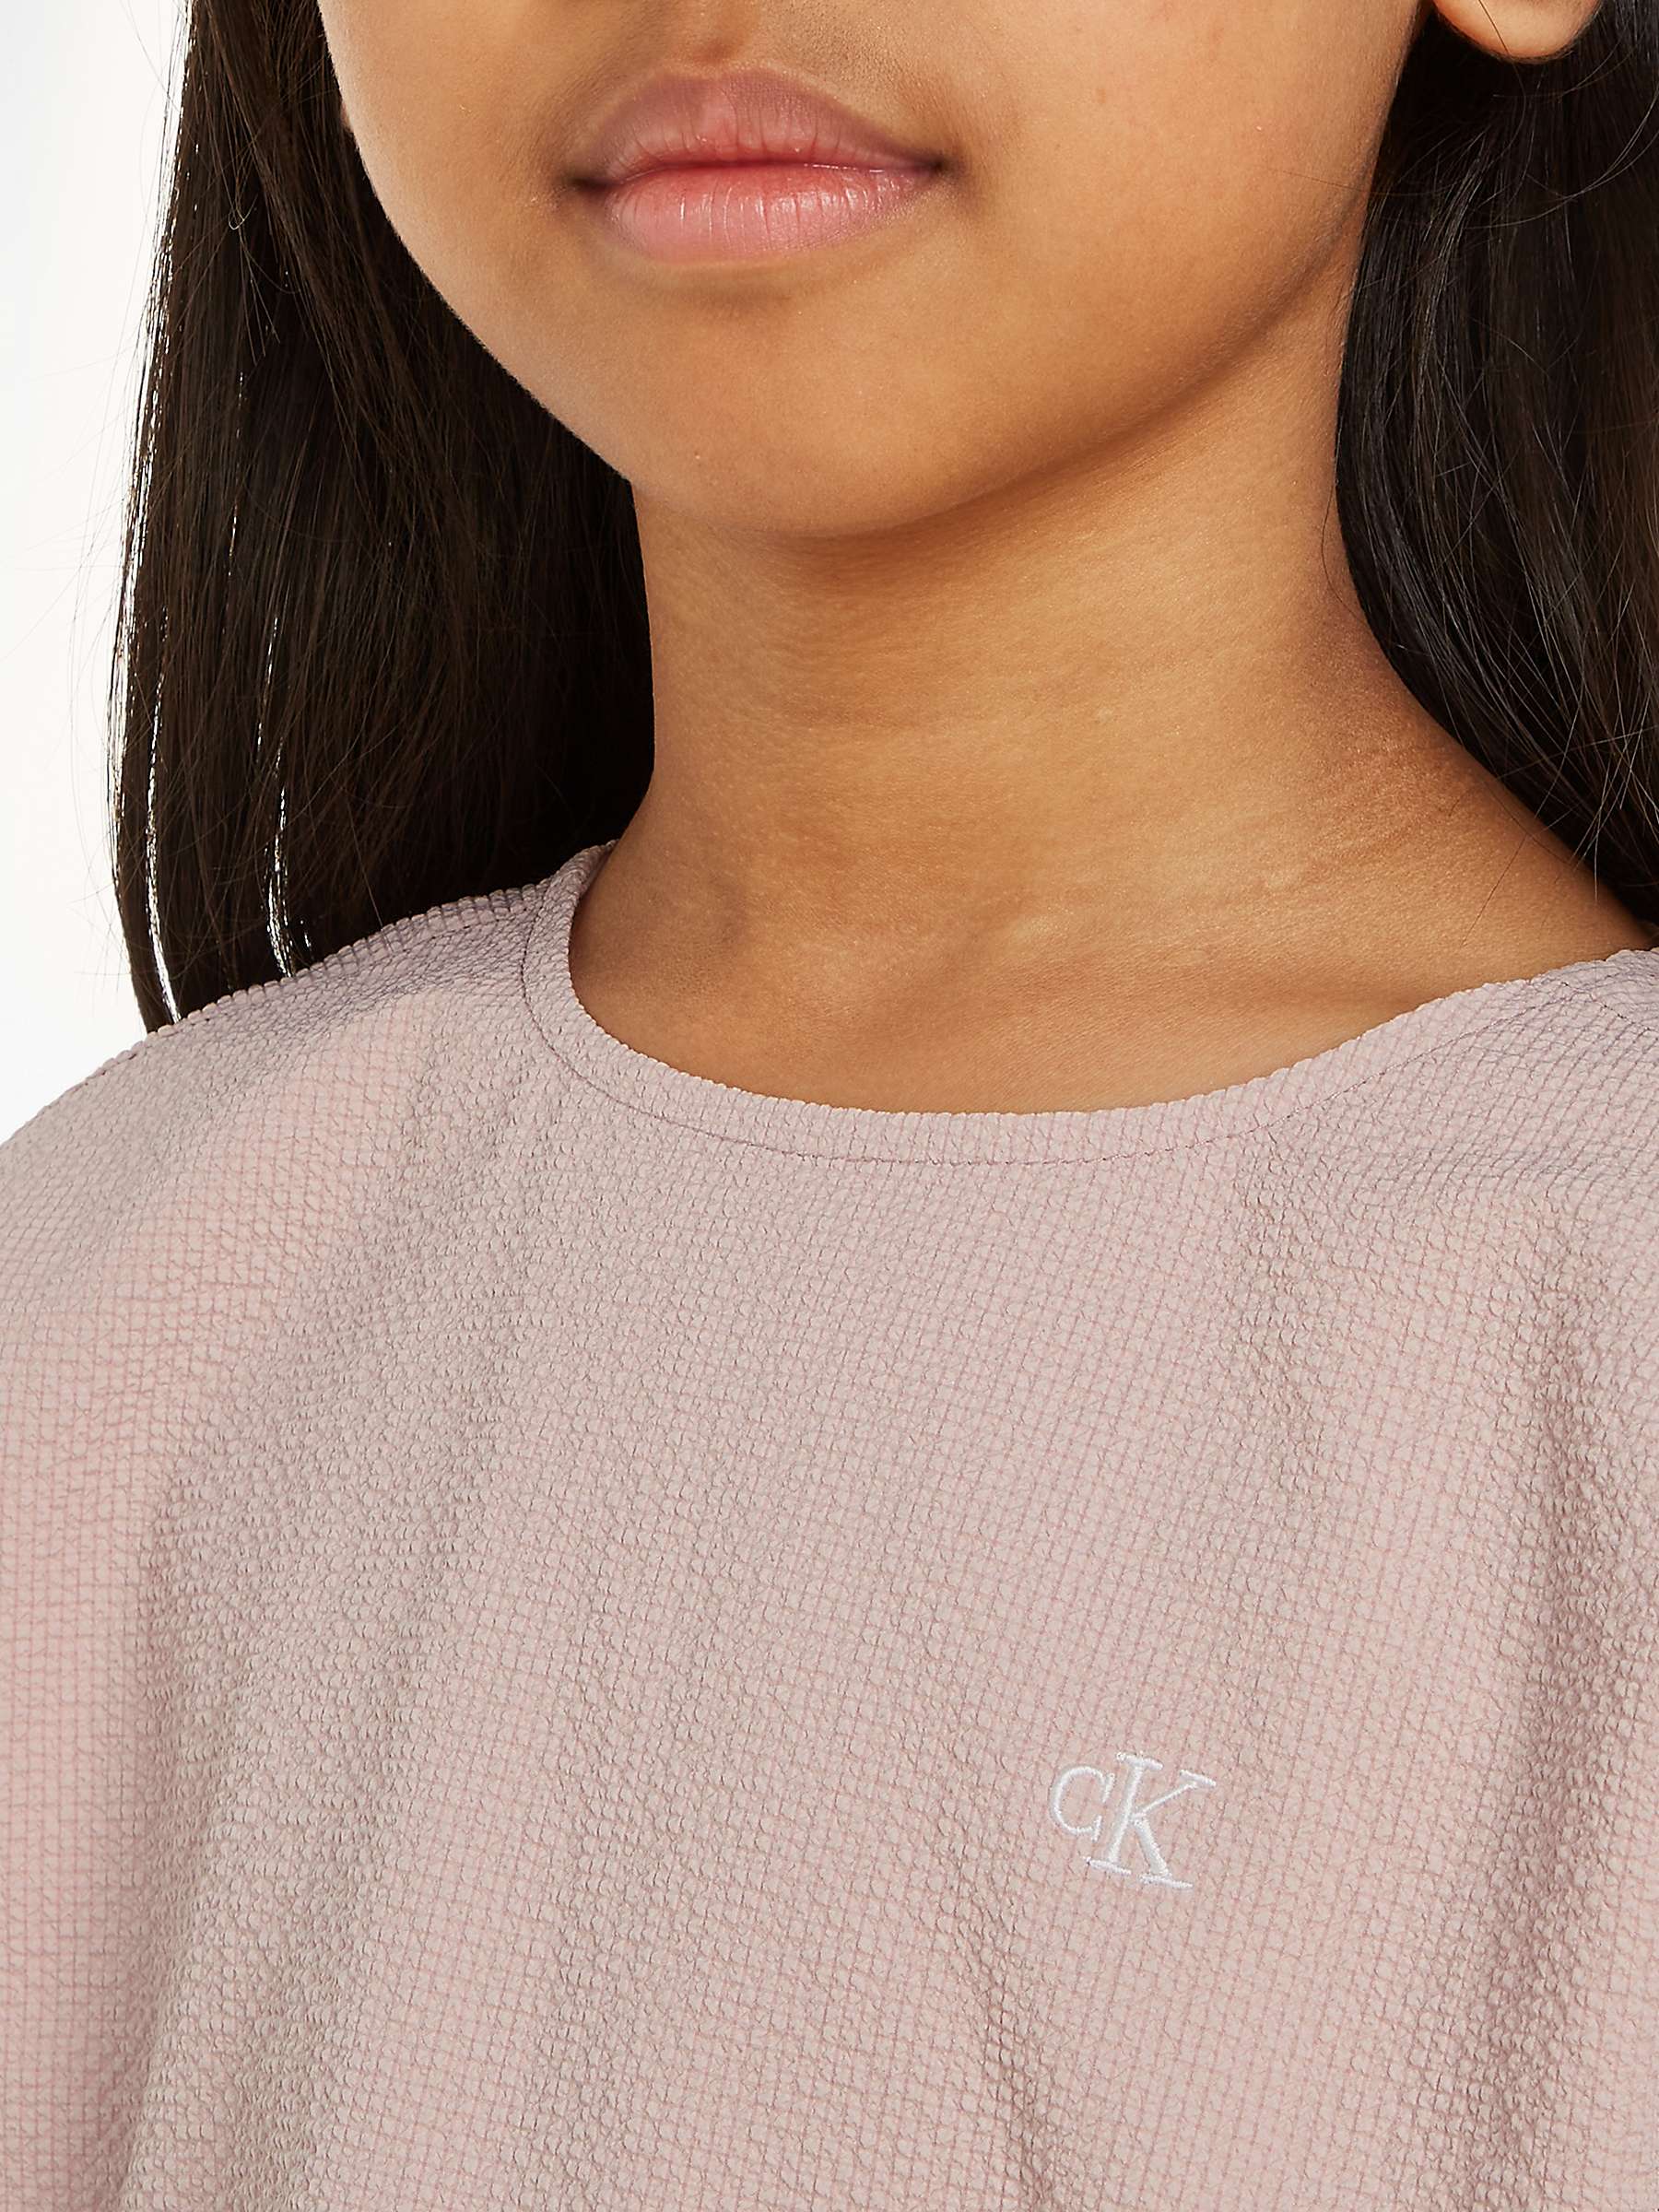 Buy Calvin Klein Kids' Short Sleeve T-Shirt, Sepia Rose Online at johnlewis.com